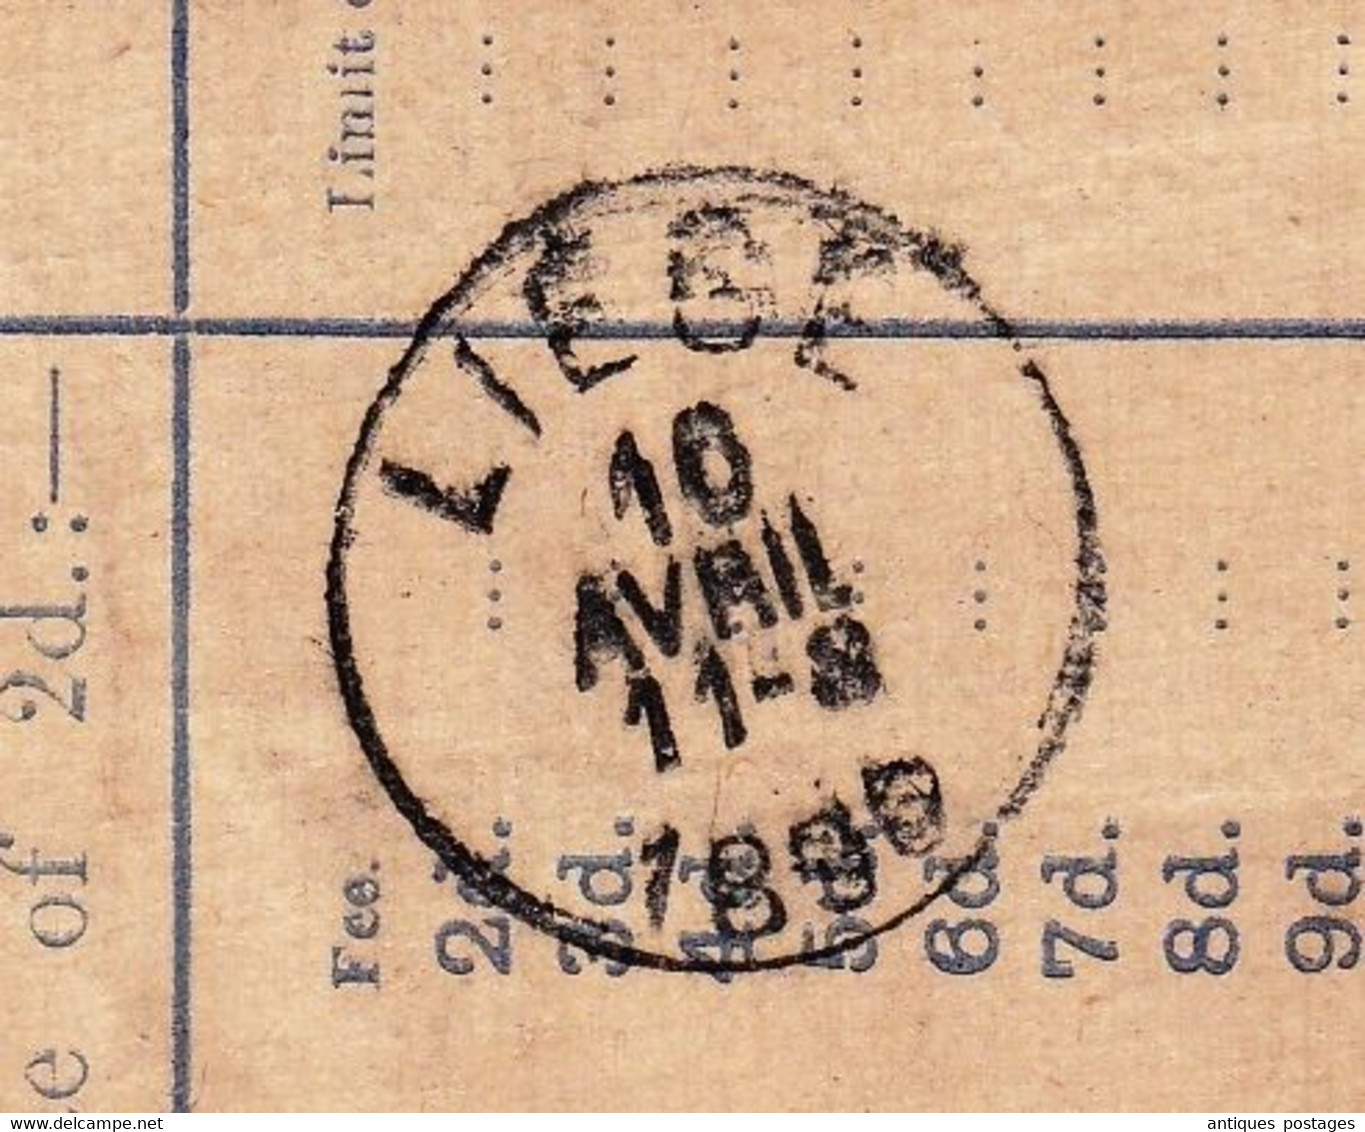 Lettre Recommandée 1896 Registered Entier Postal Birmingham England Liège Belgique Registration Two Pence